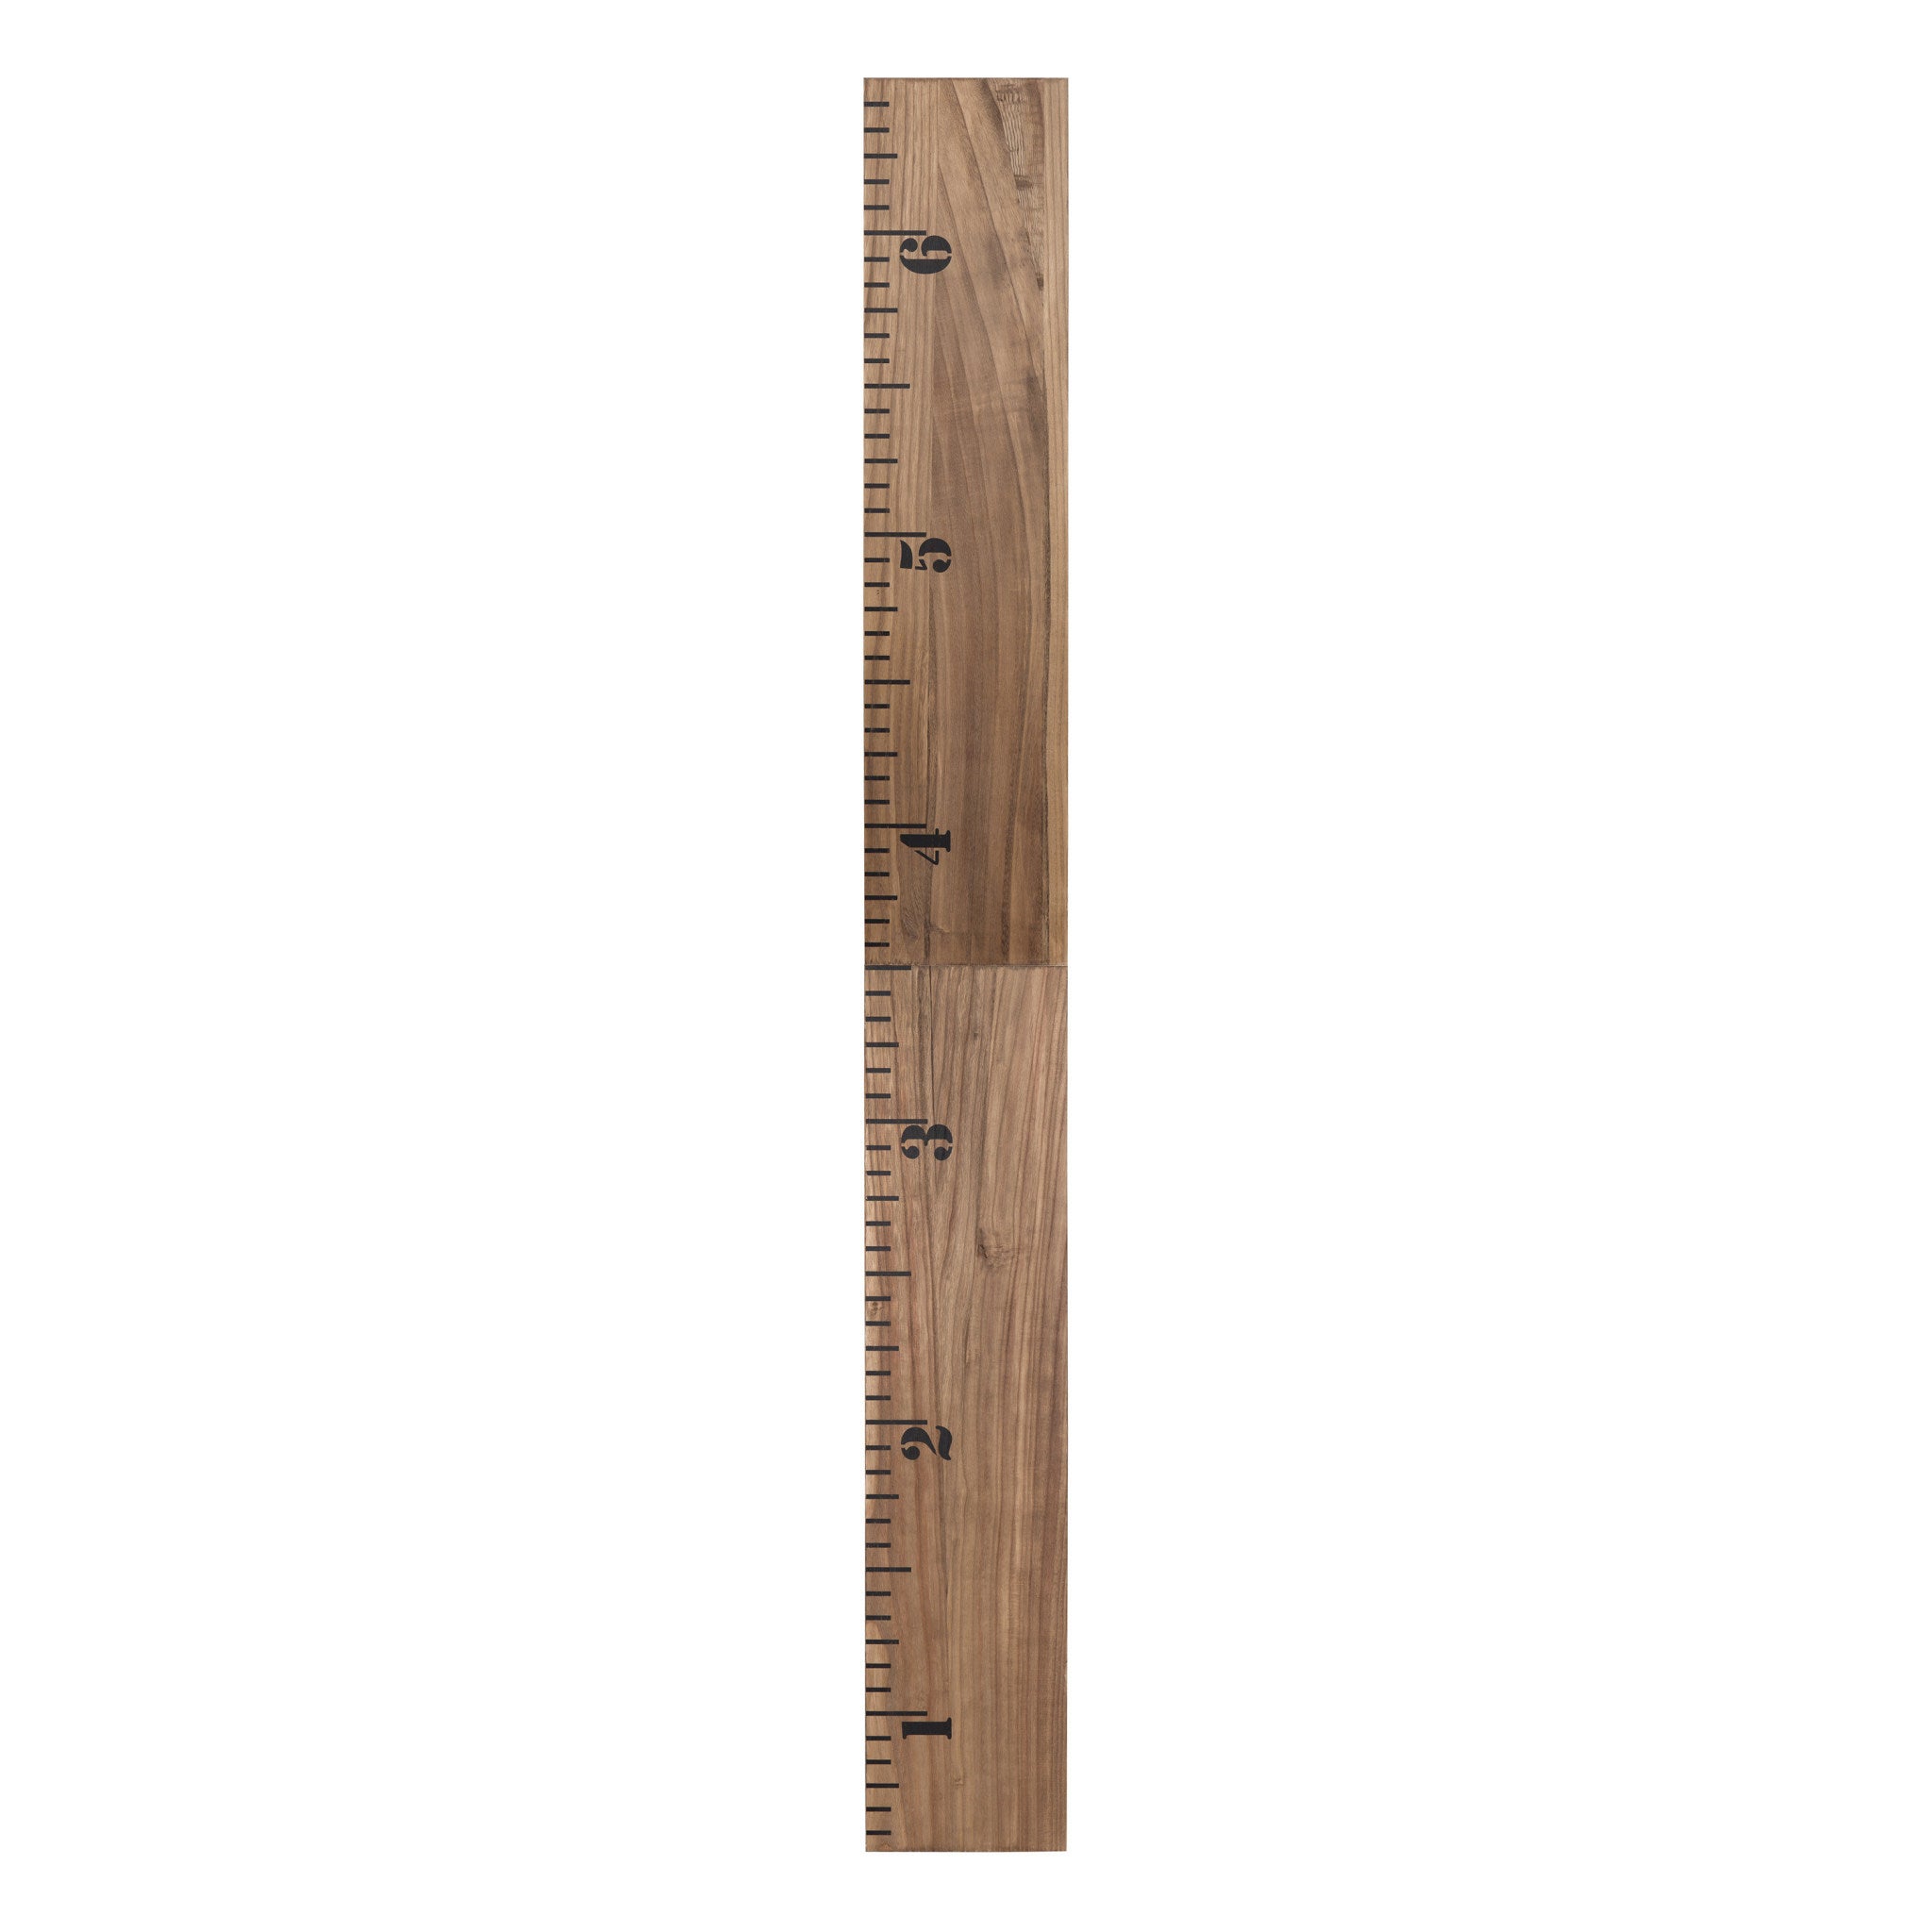 Growth Chart 6.5' Wood Wall Ruler